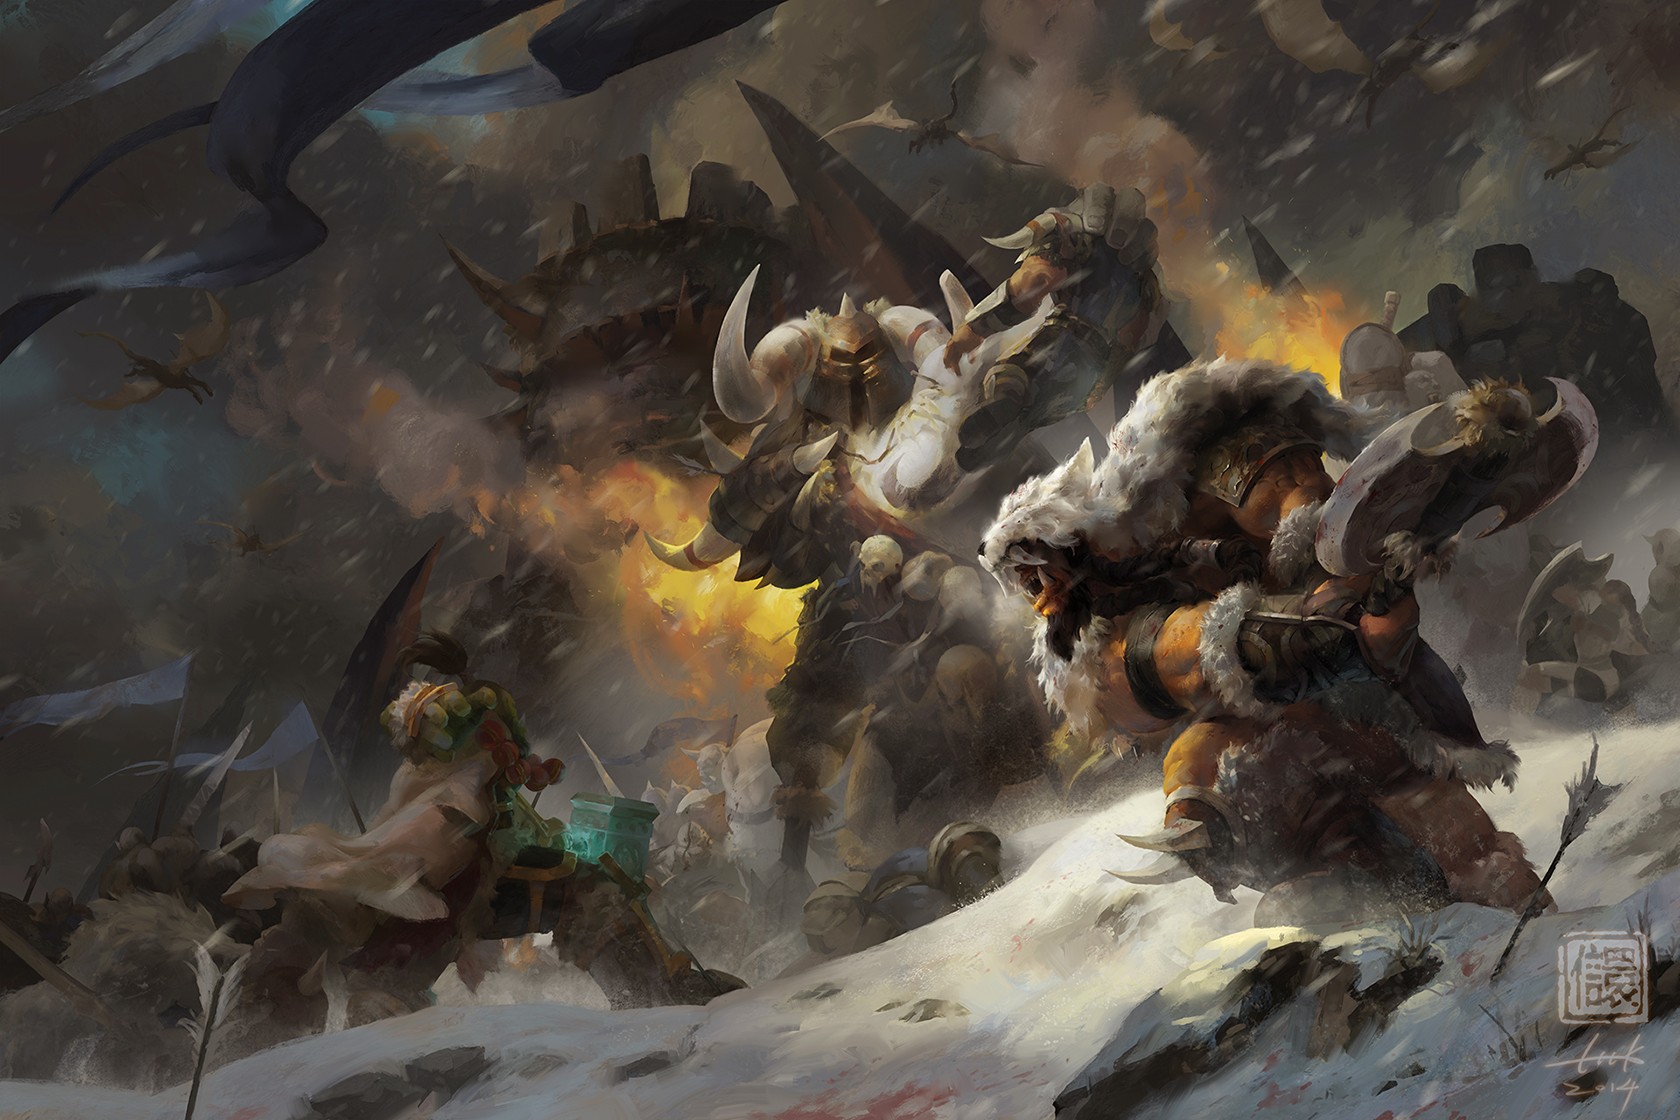 General 1680x1120 fantasy art World of Warcraft Thrall Durotan PC gaming DeviantArt video game art